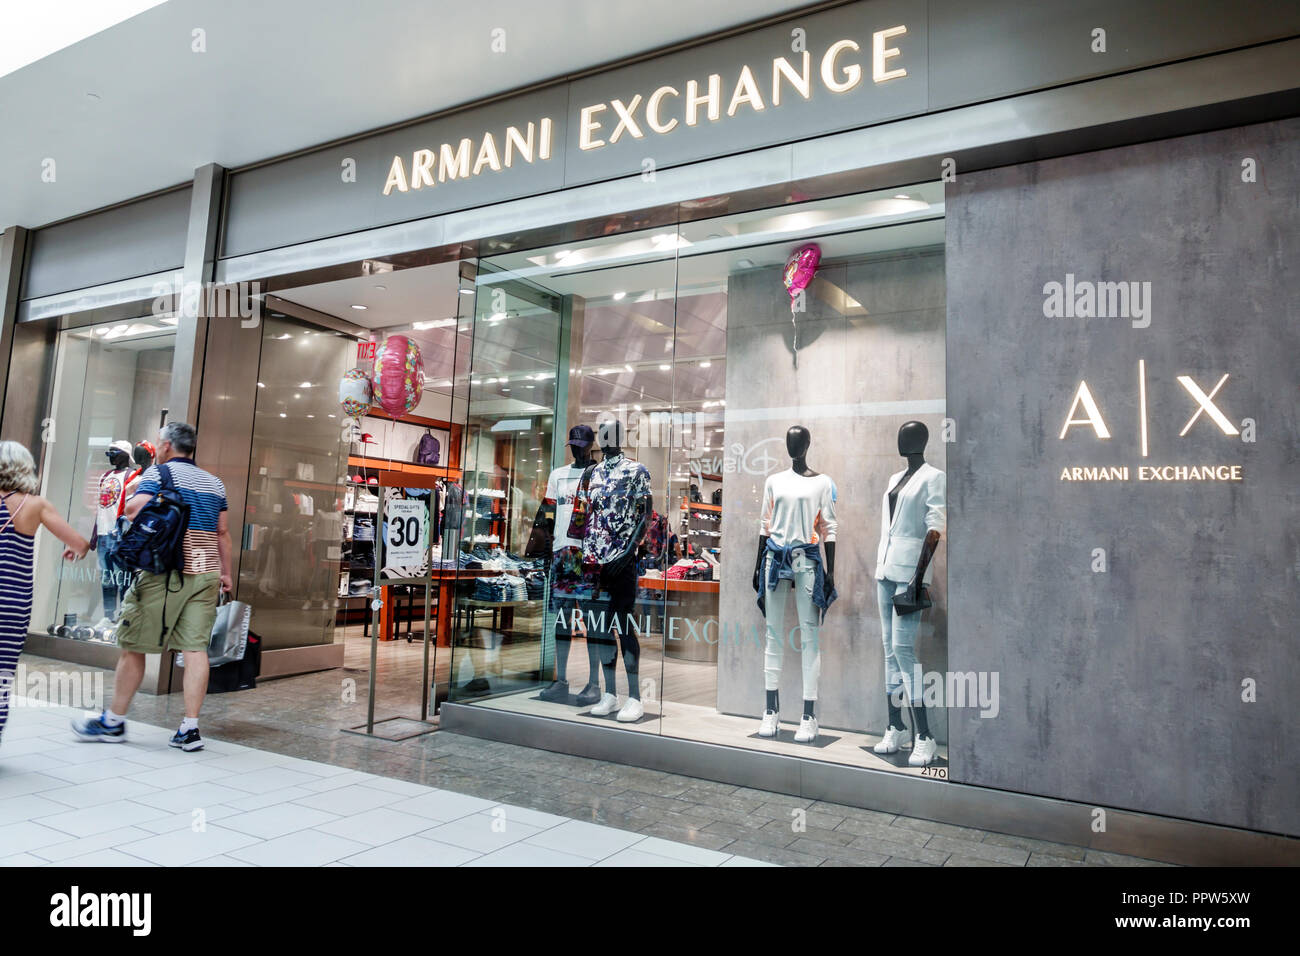 Armani Shop Front Stock Photos & Armani Shop Front Stock Images ...